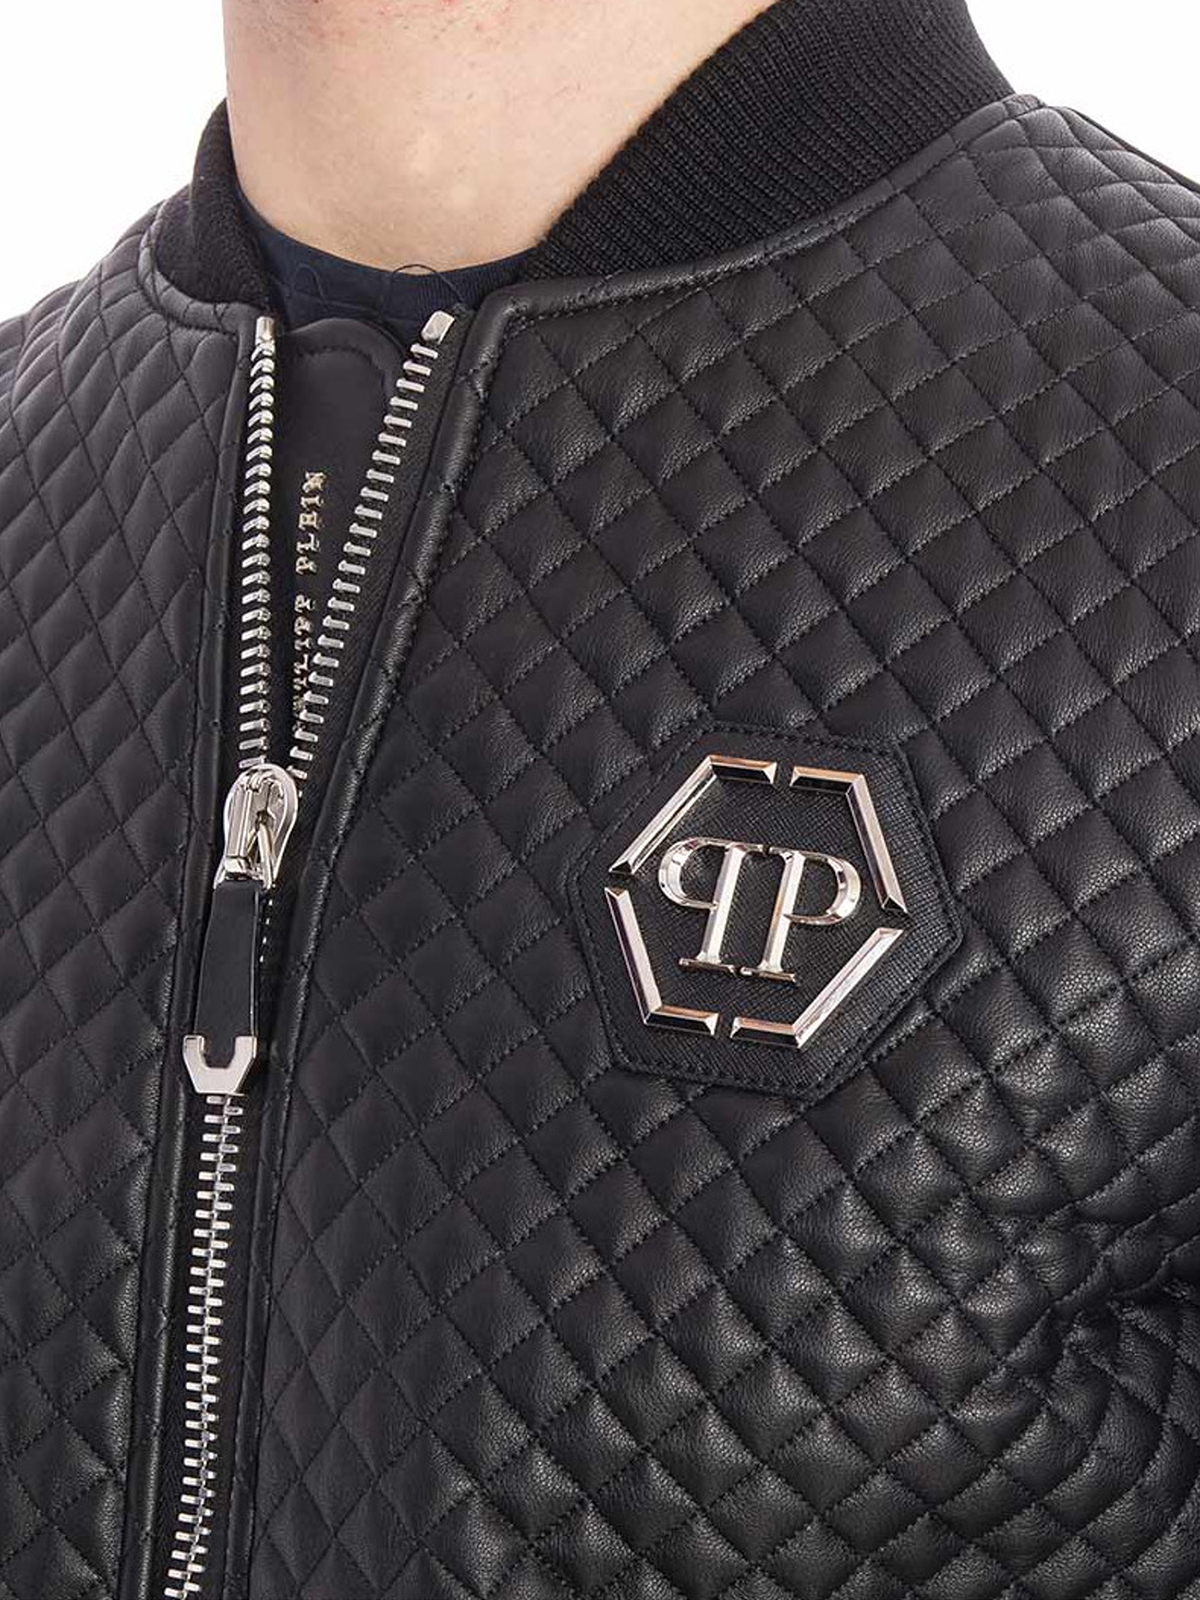 philipp plein leather jacket